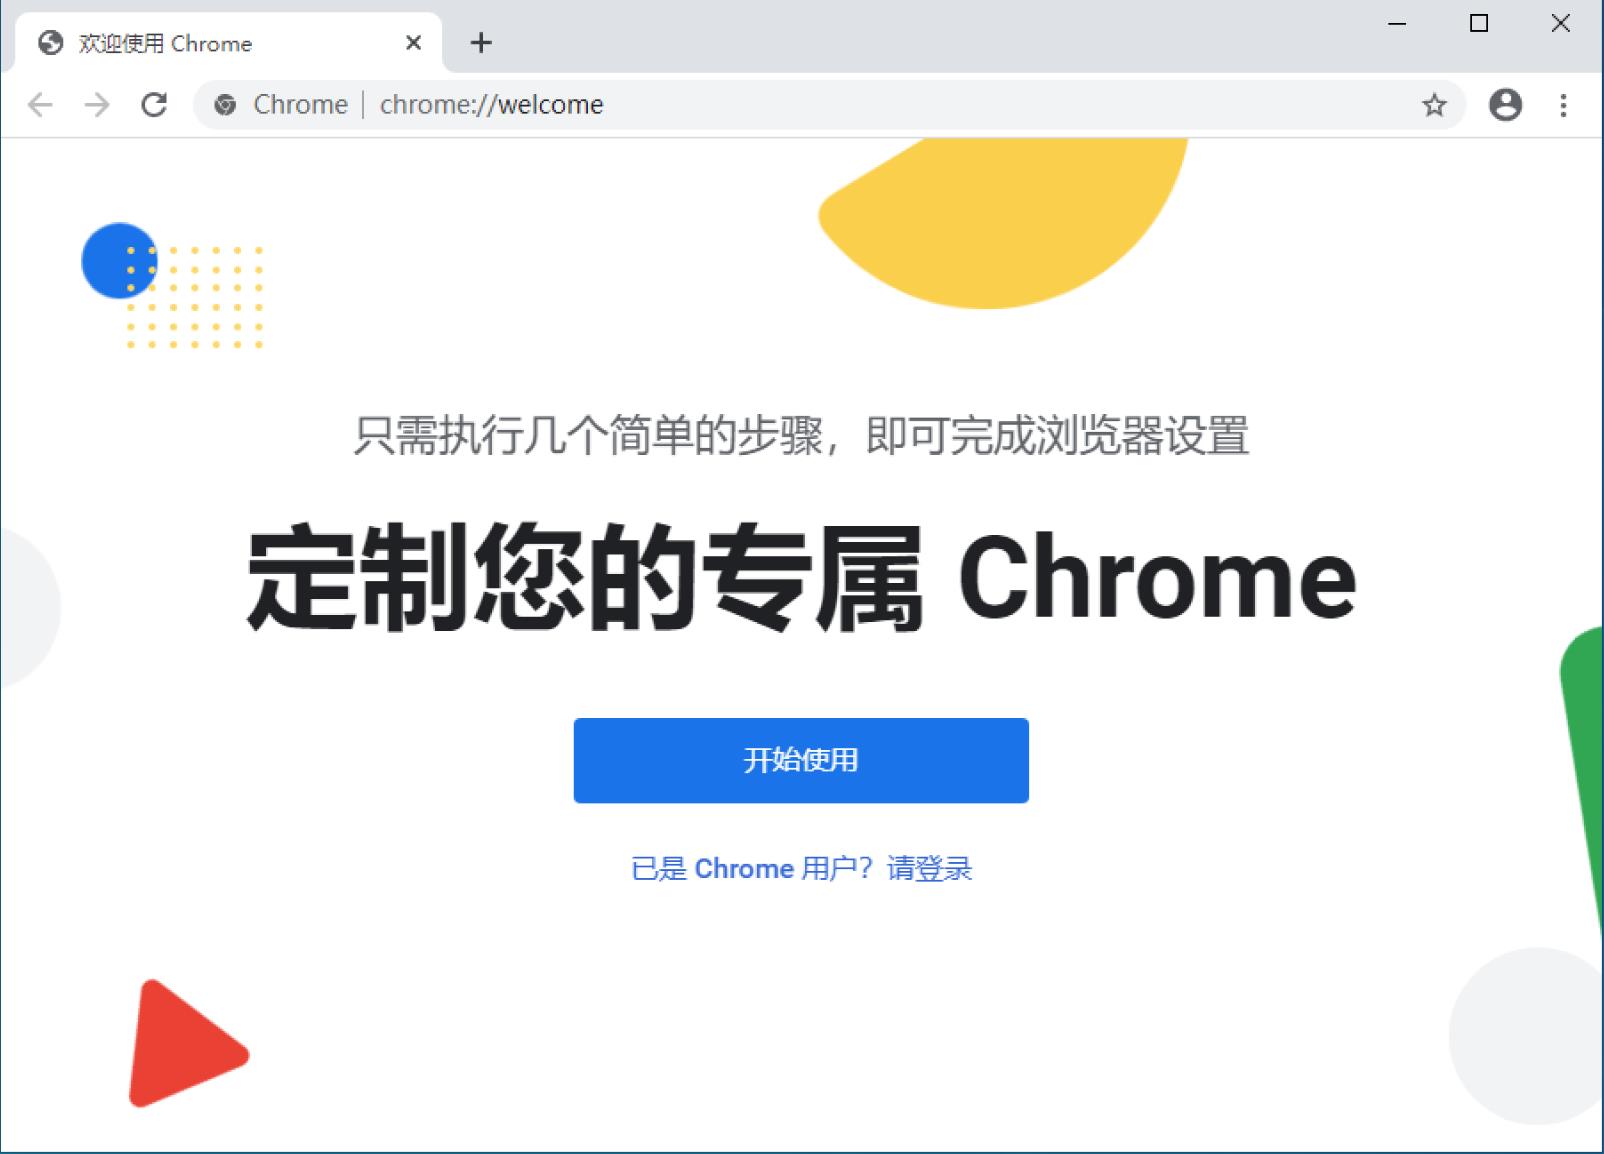 Google Chrome85.0.4183.83  Chrome 85 最新离线稳定版